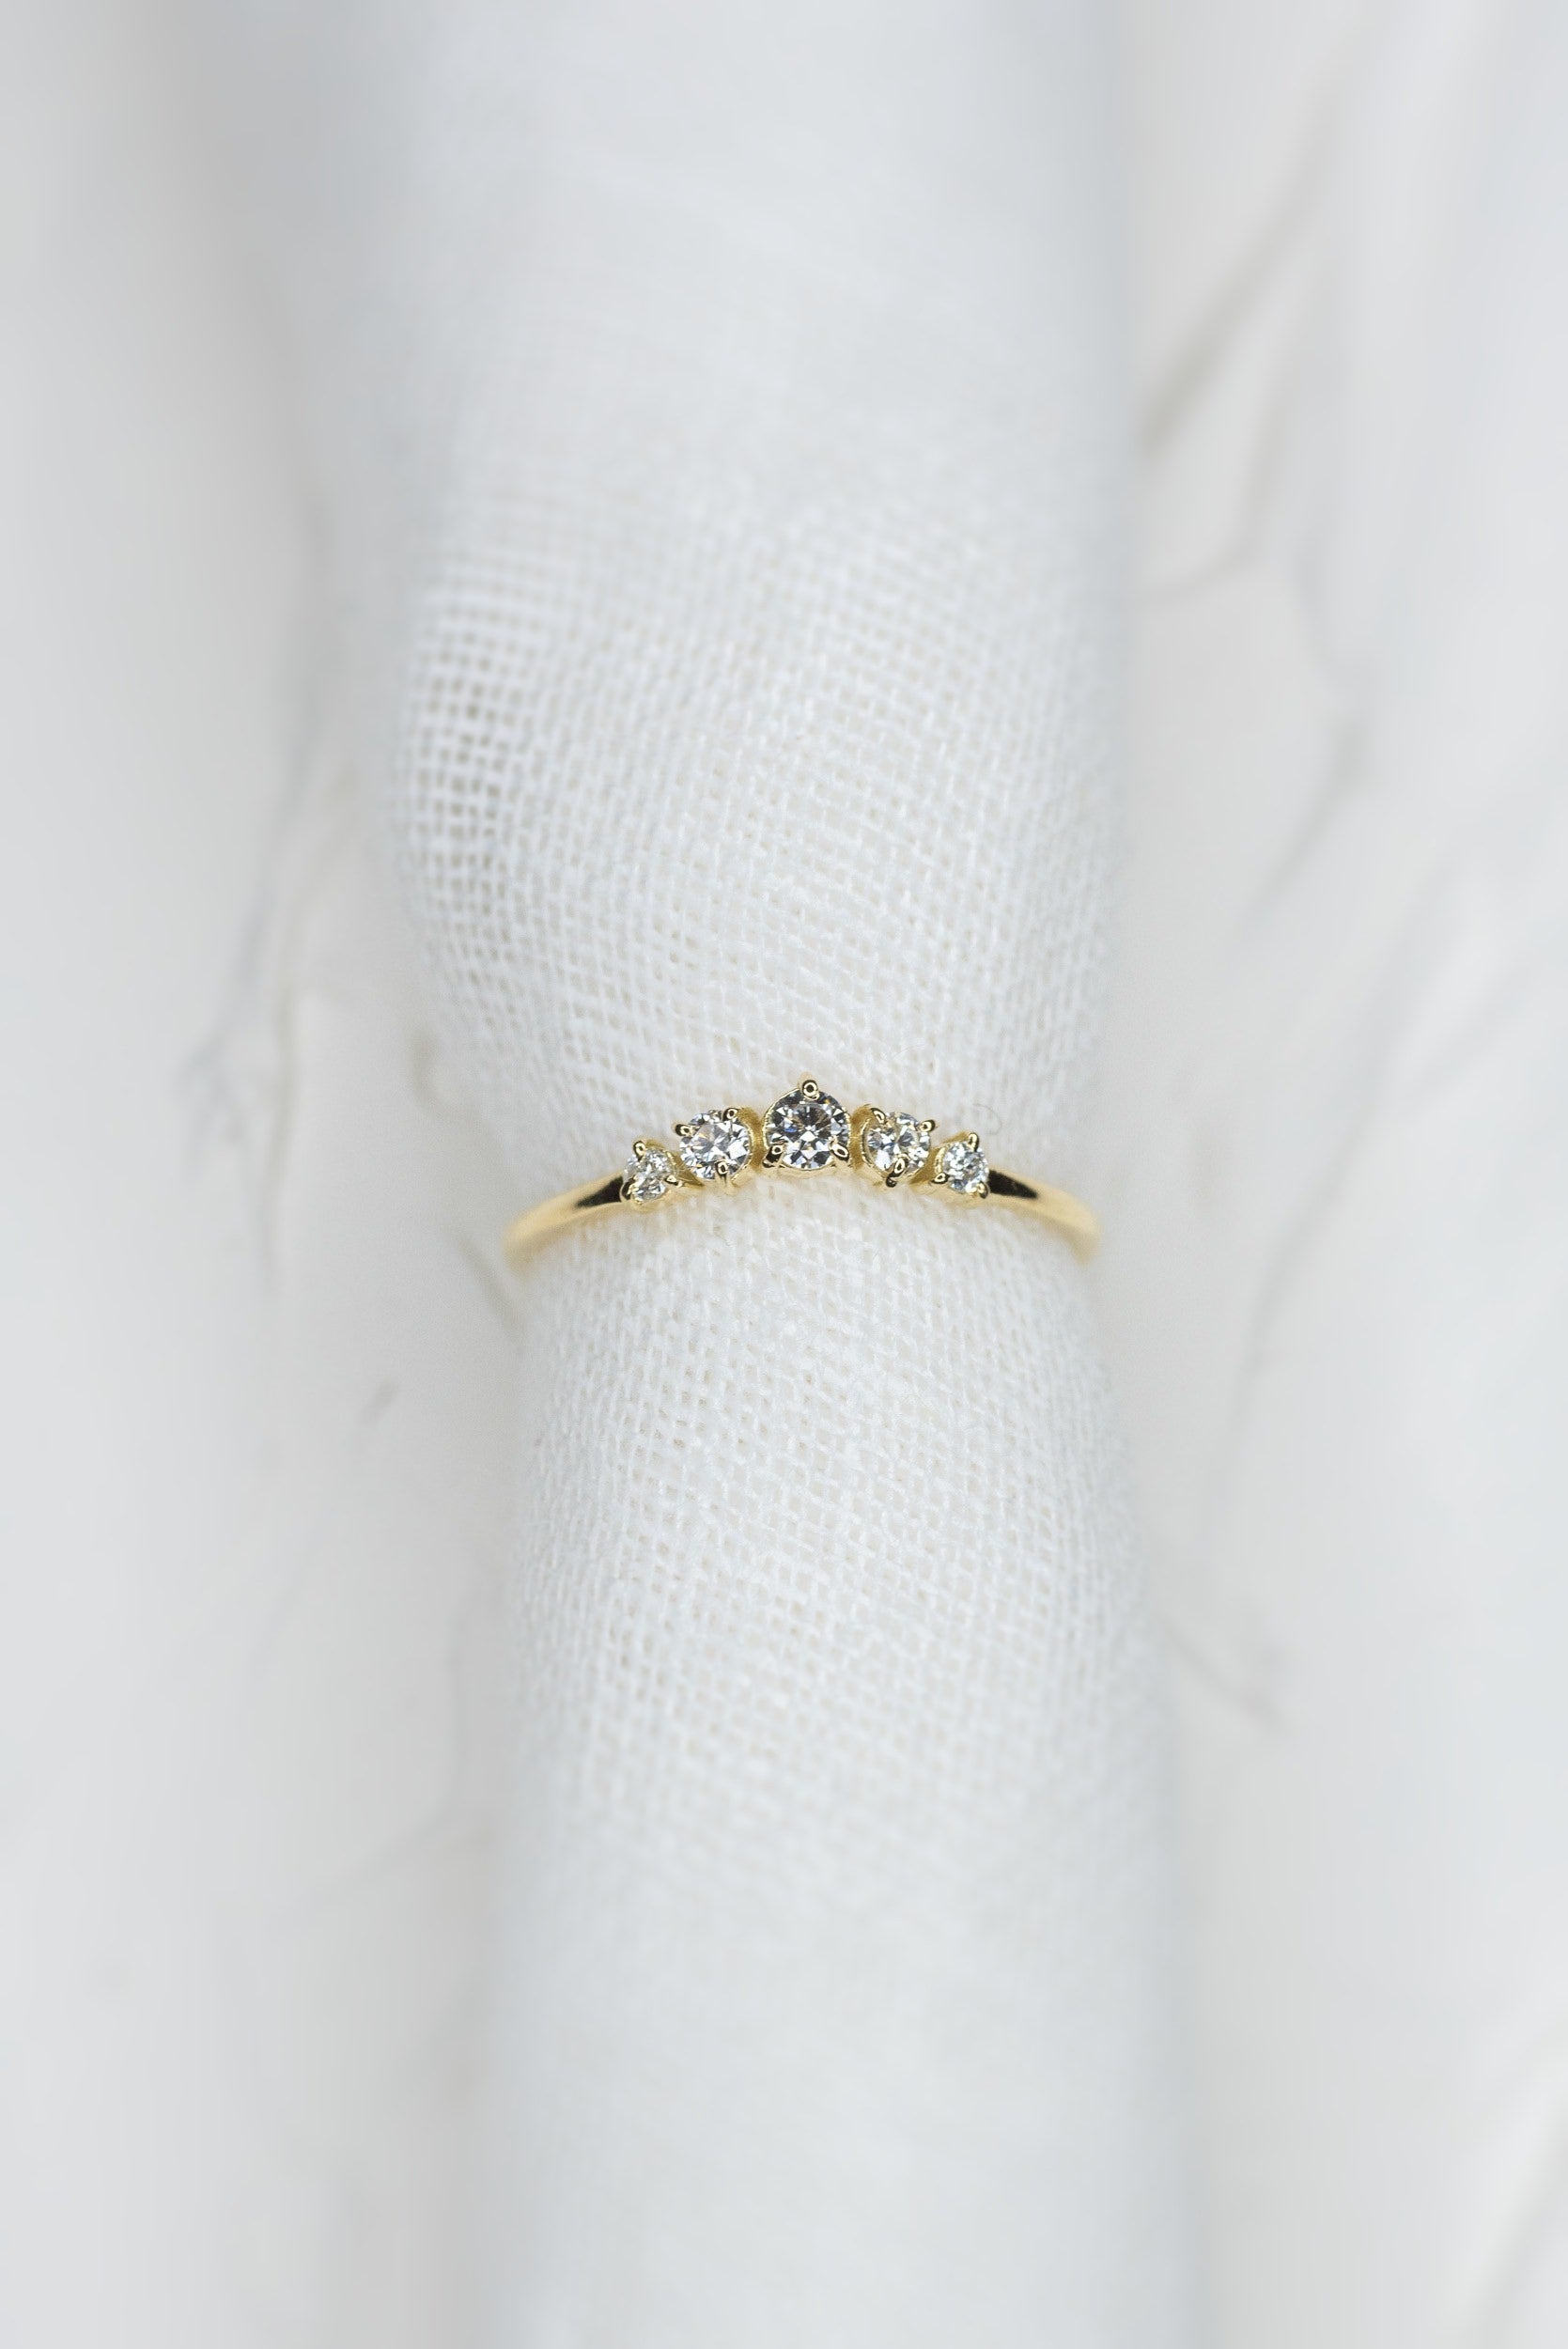 Crown of Arran - Lelya - bespoke engagement and wedding rings made in Scotland, UK